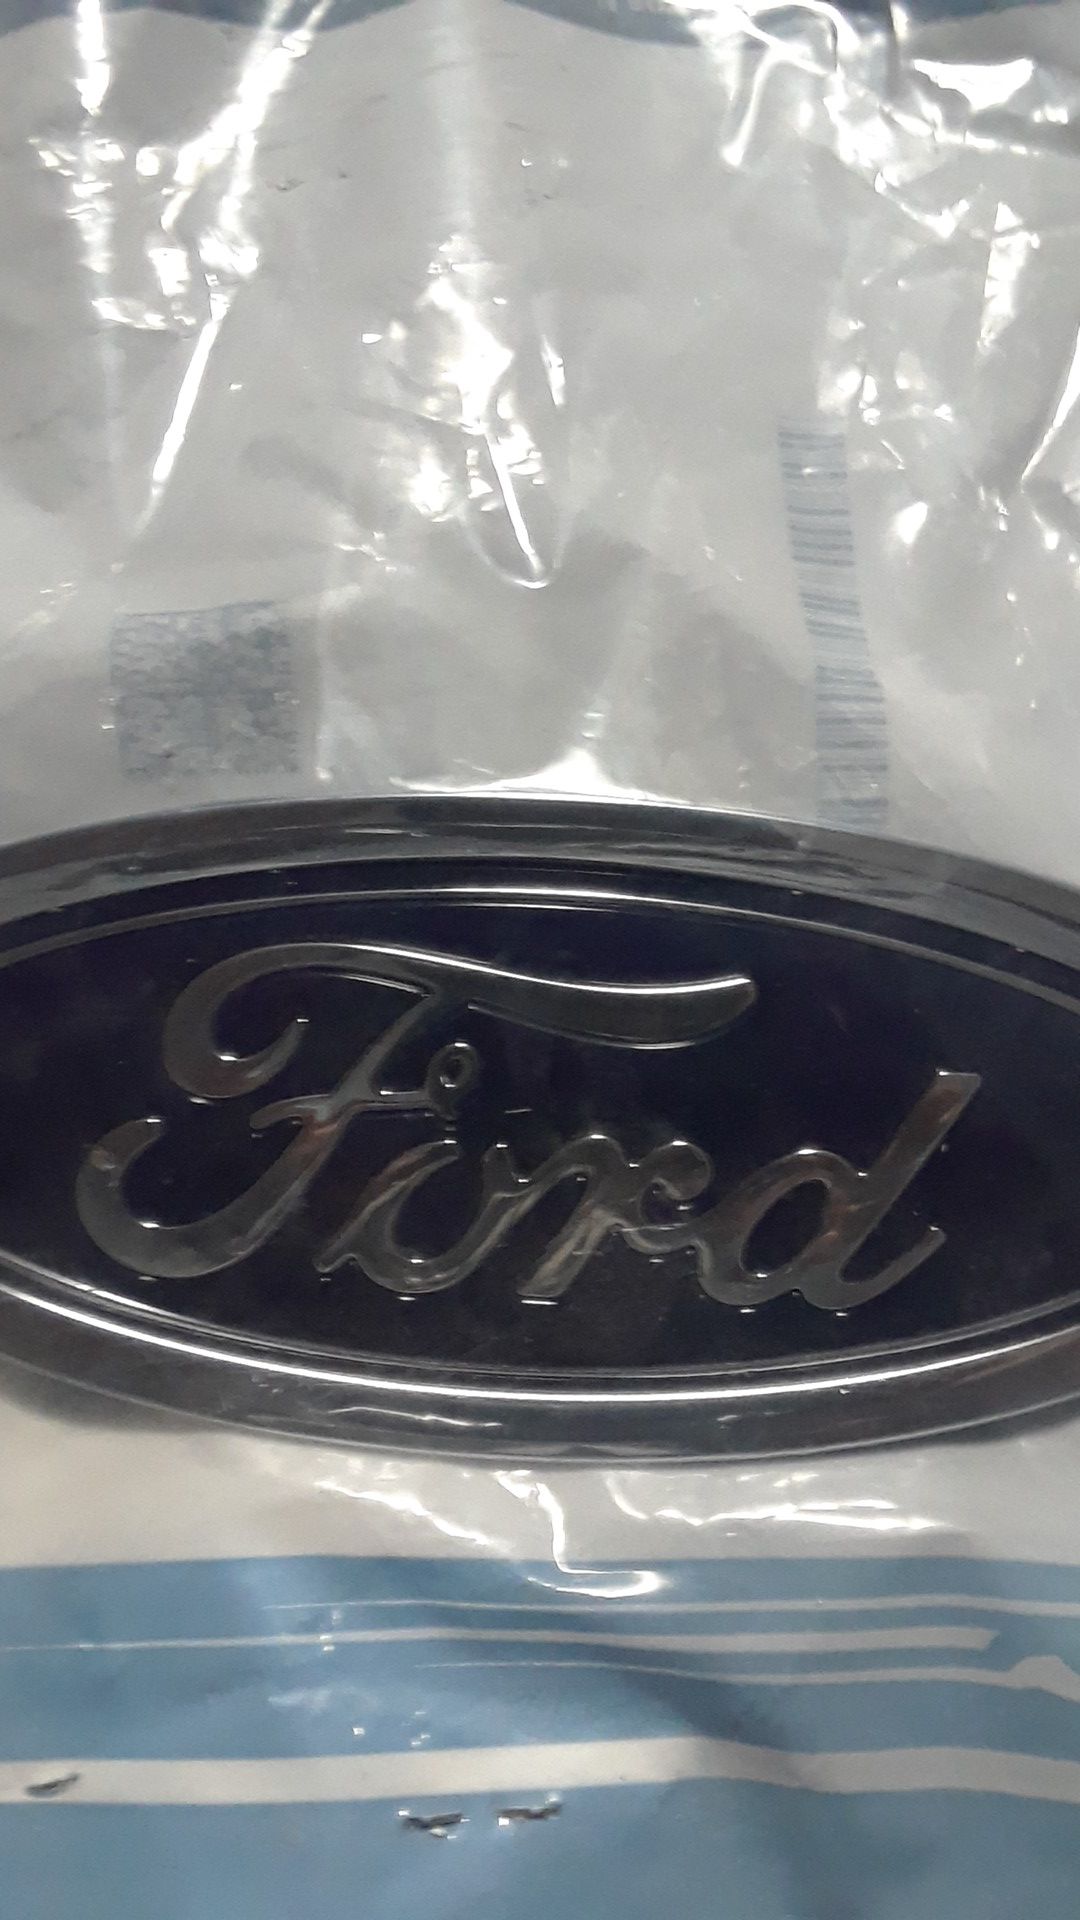 Ford fusion back emblem